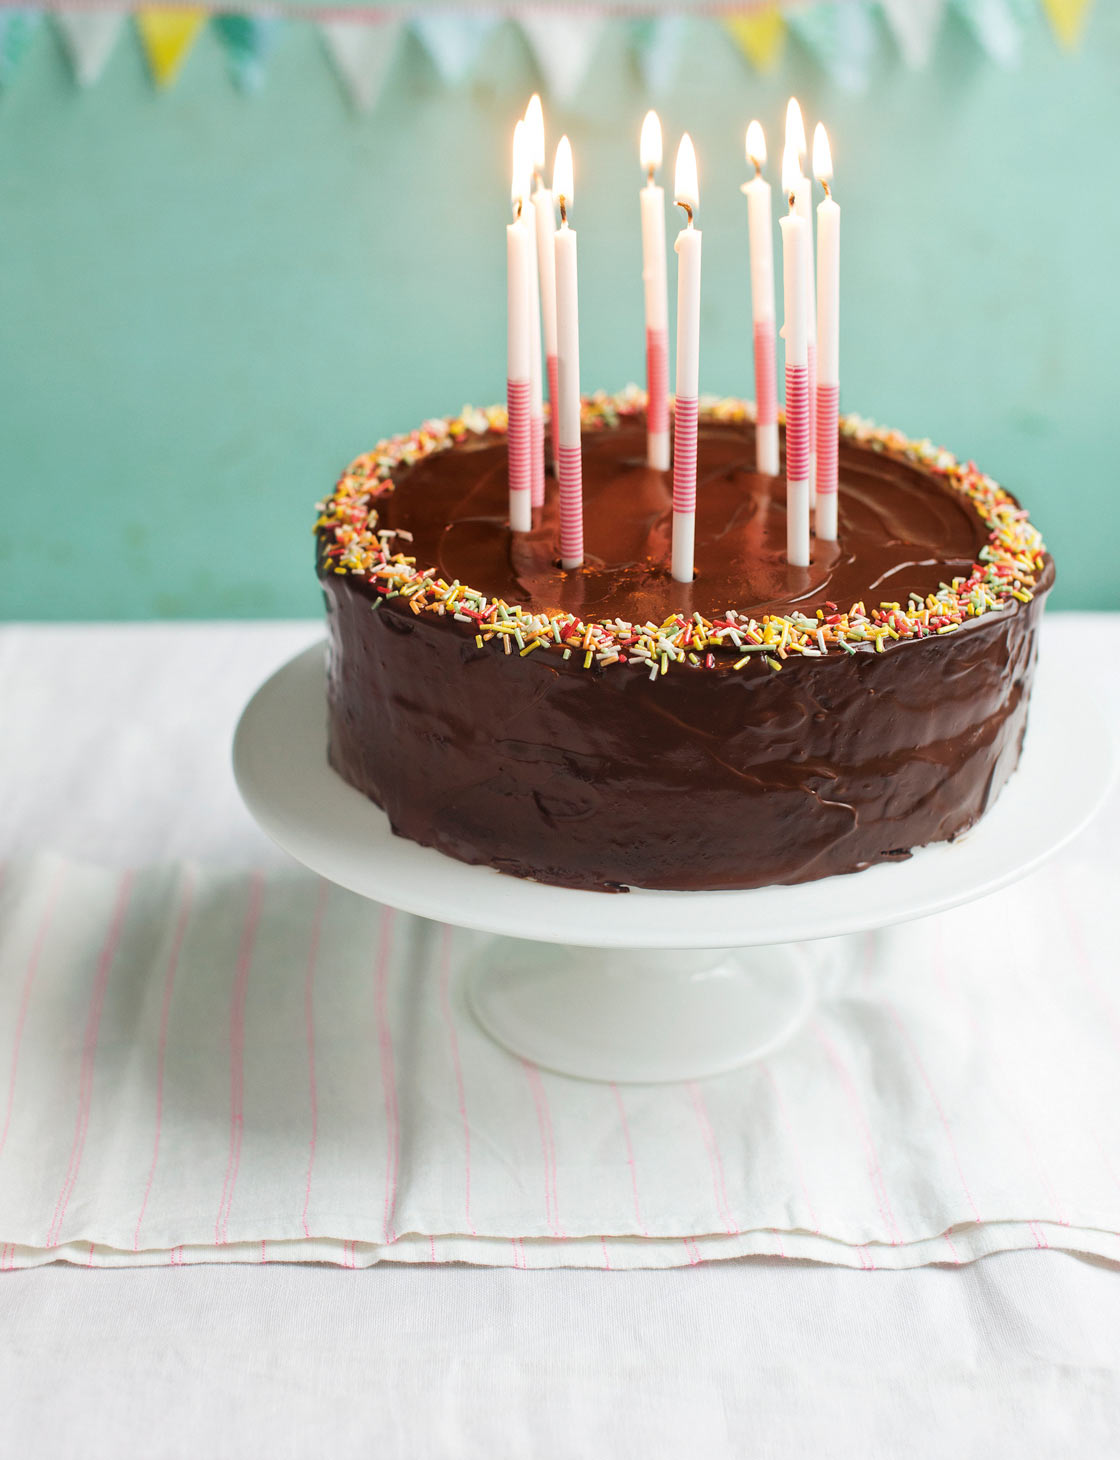 Buy  Send Birthday Chocolate Cake  Shopnideascom